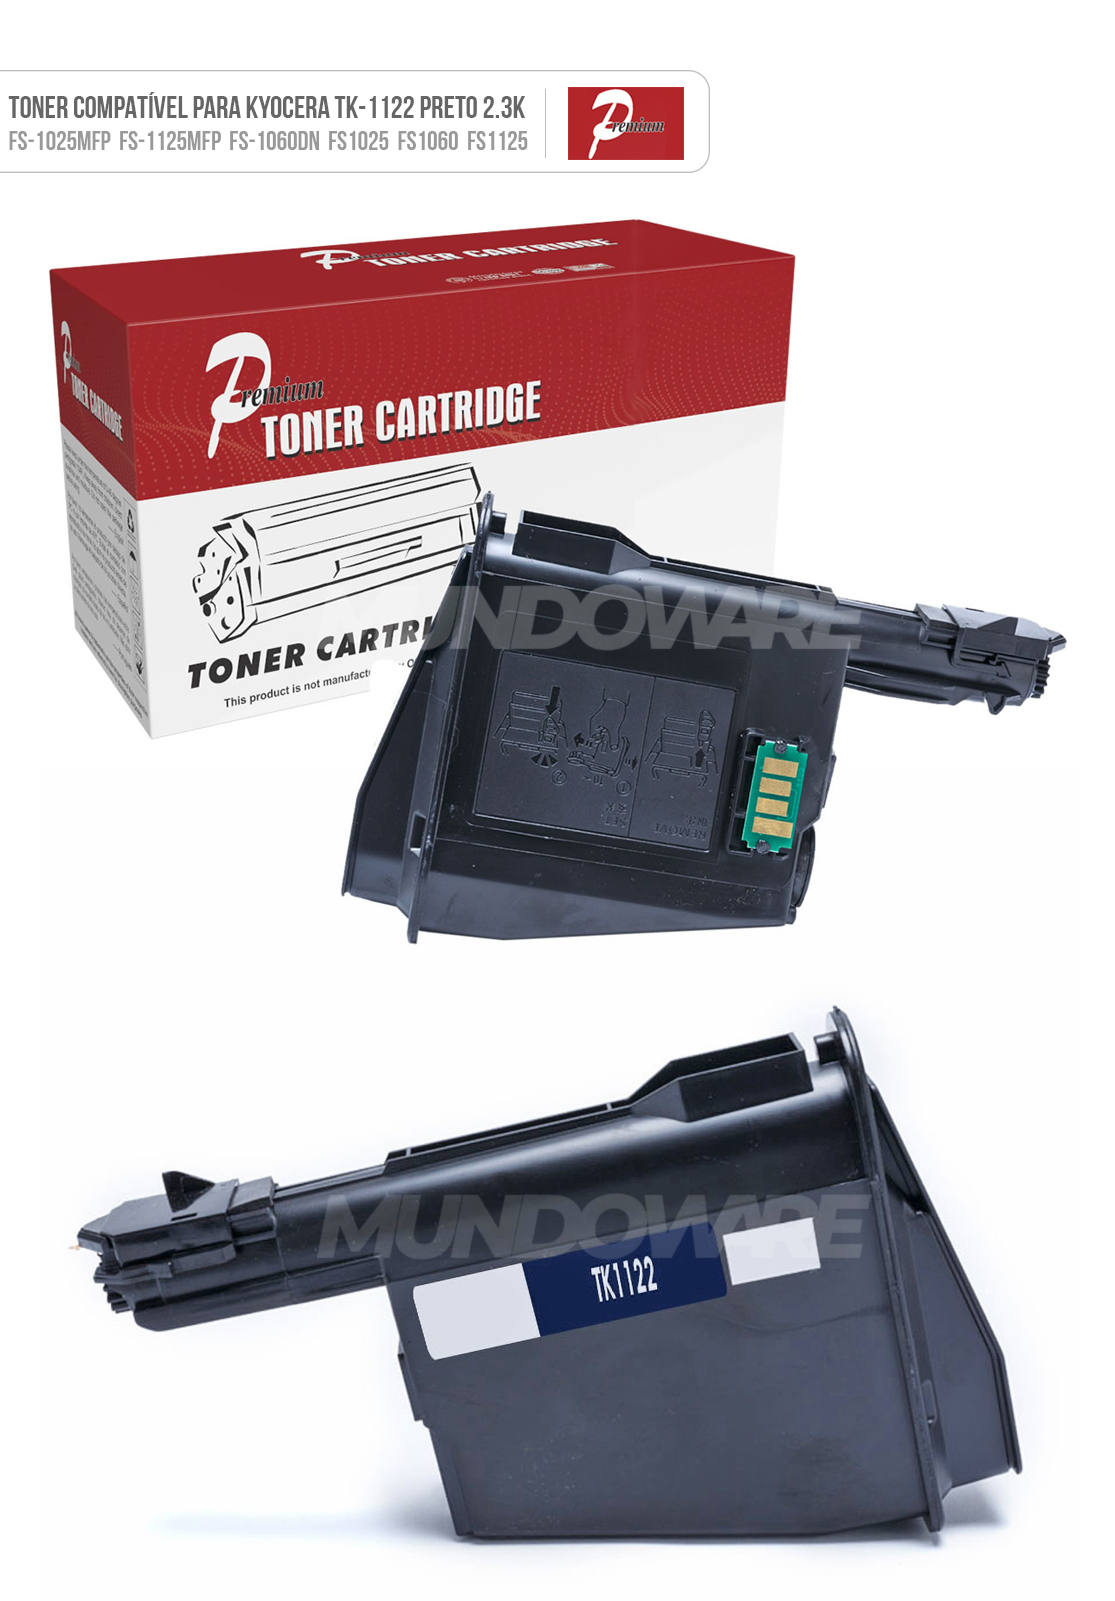 Toner Compatível para Kyocera TK1122 TK-1122 para FS-1025mfp FS-1125mfp FS-1060dn FS1025 FS1125 Premium Preto 2.300